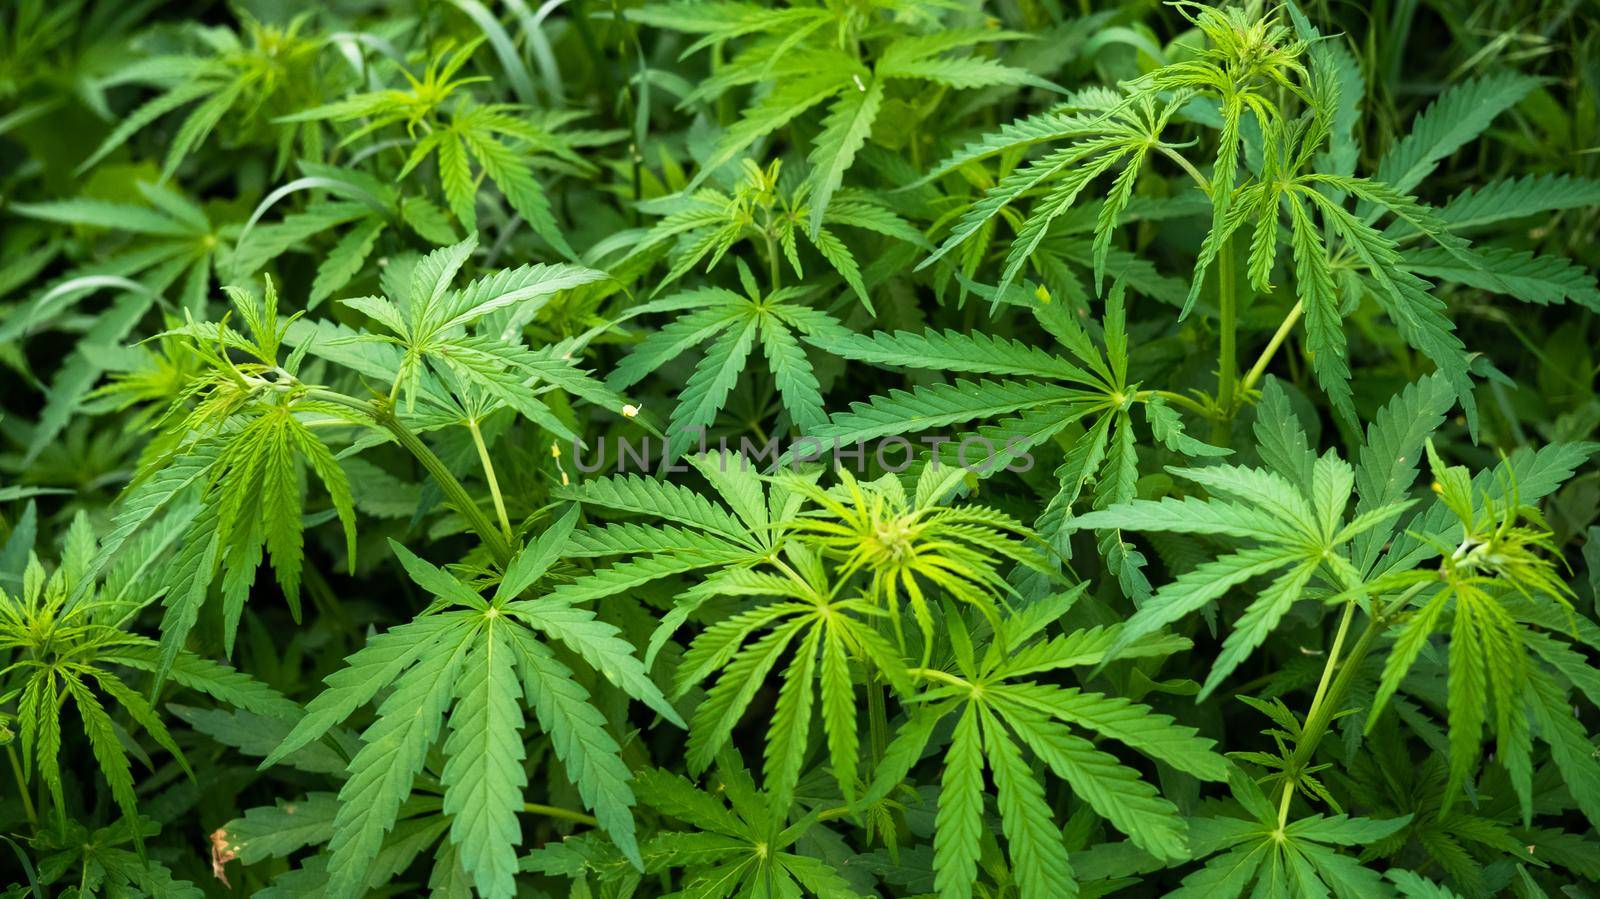 Cannabis Marijuana mature plant field, young hemp leaves. Cannabis plants growing outdoor.